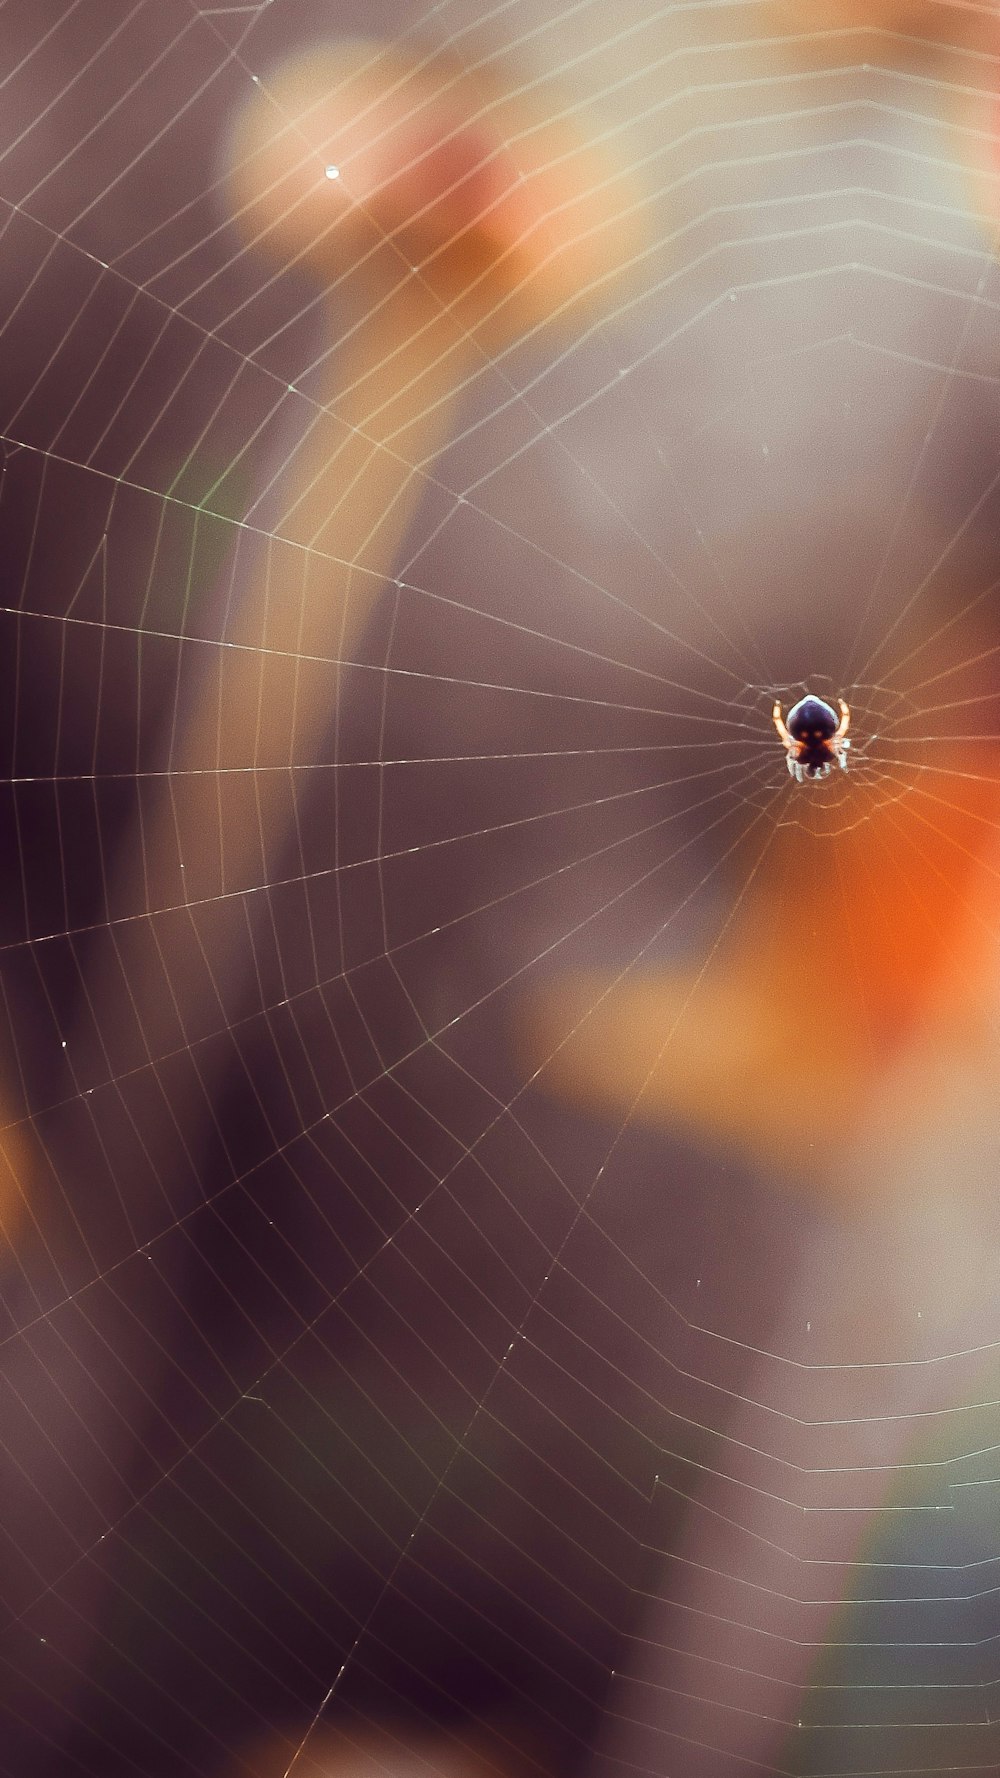 black spider on web